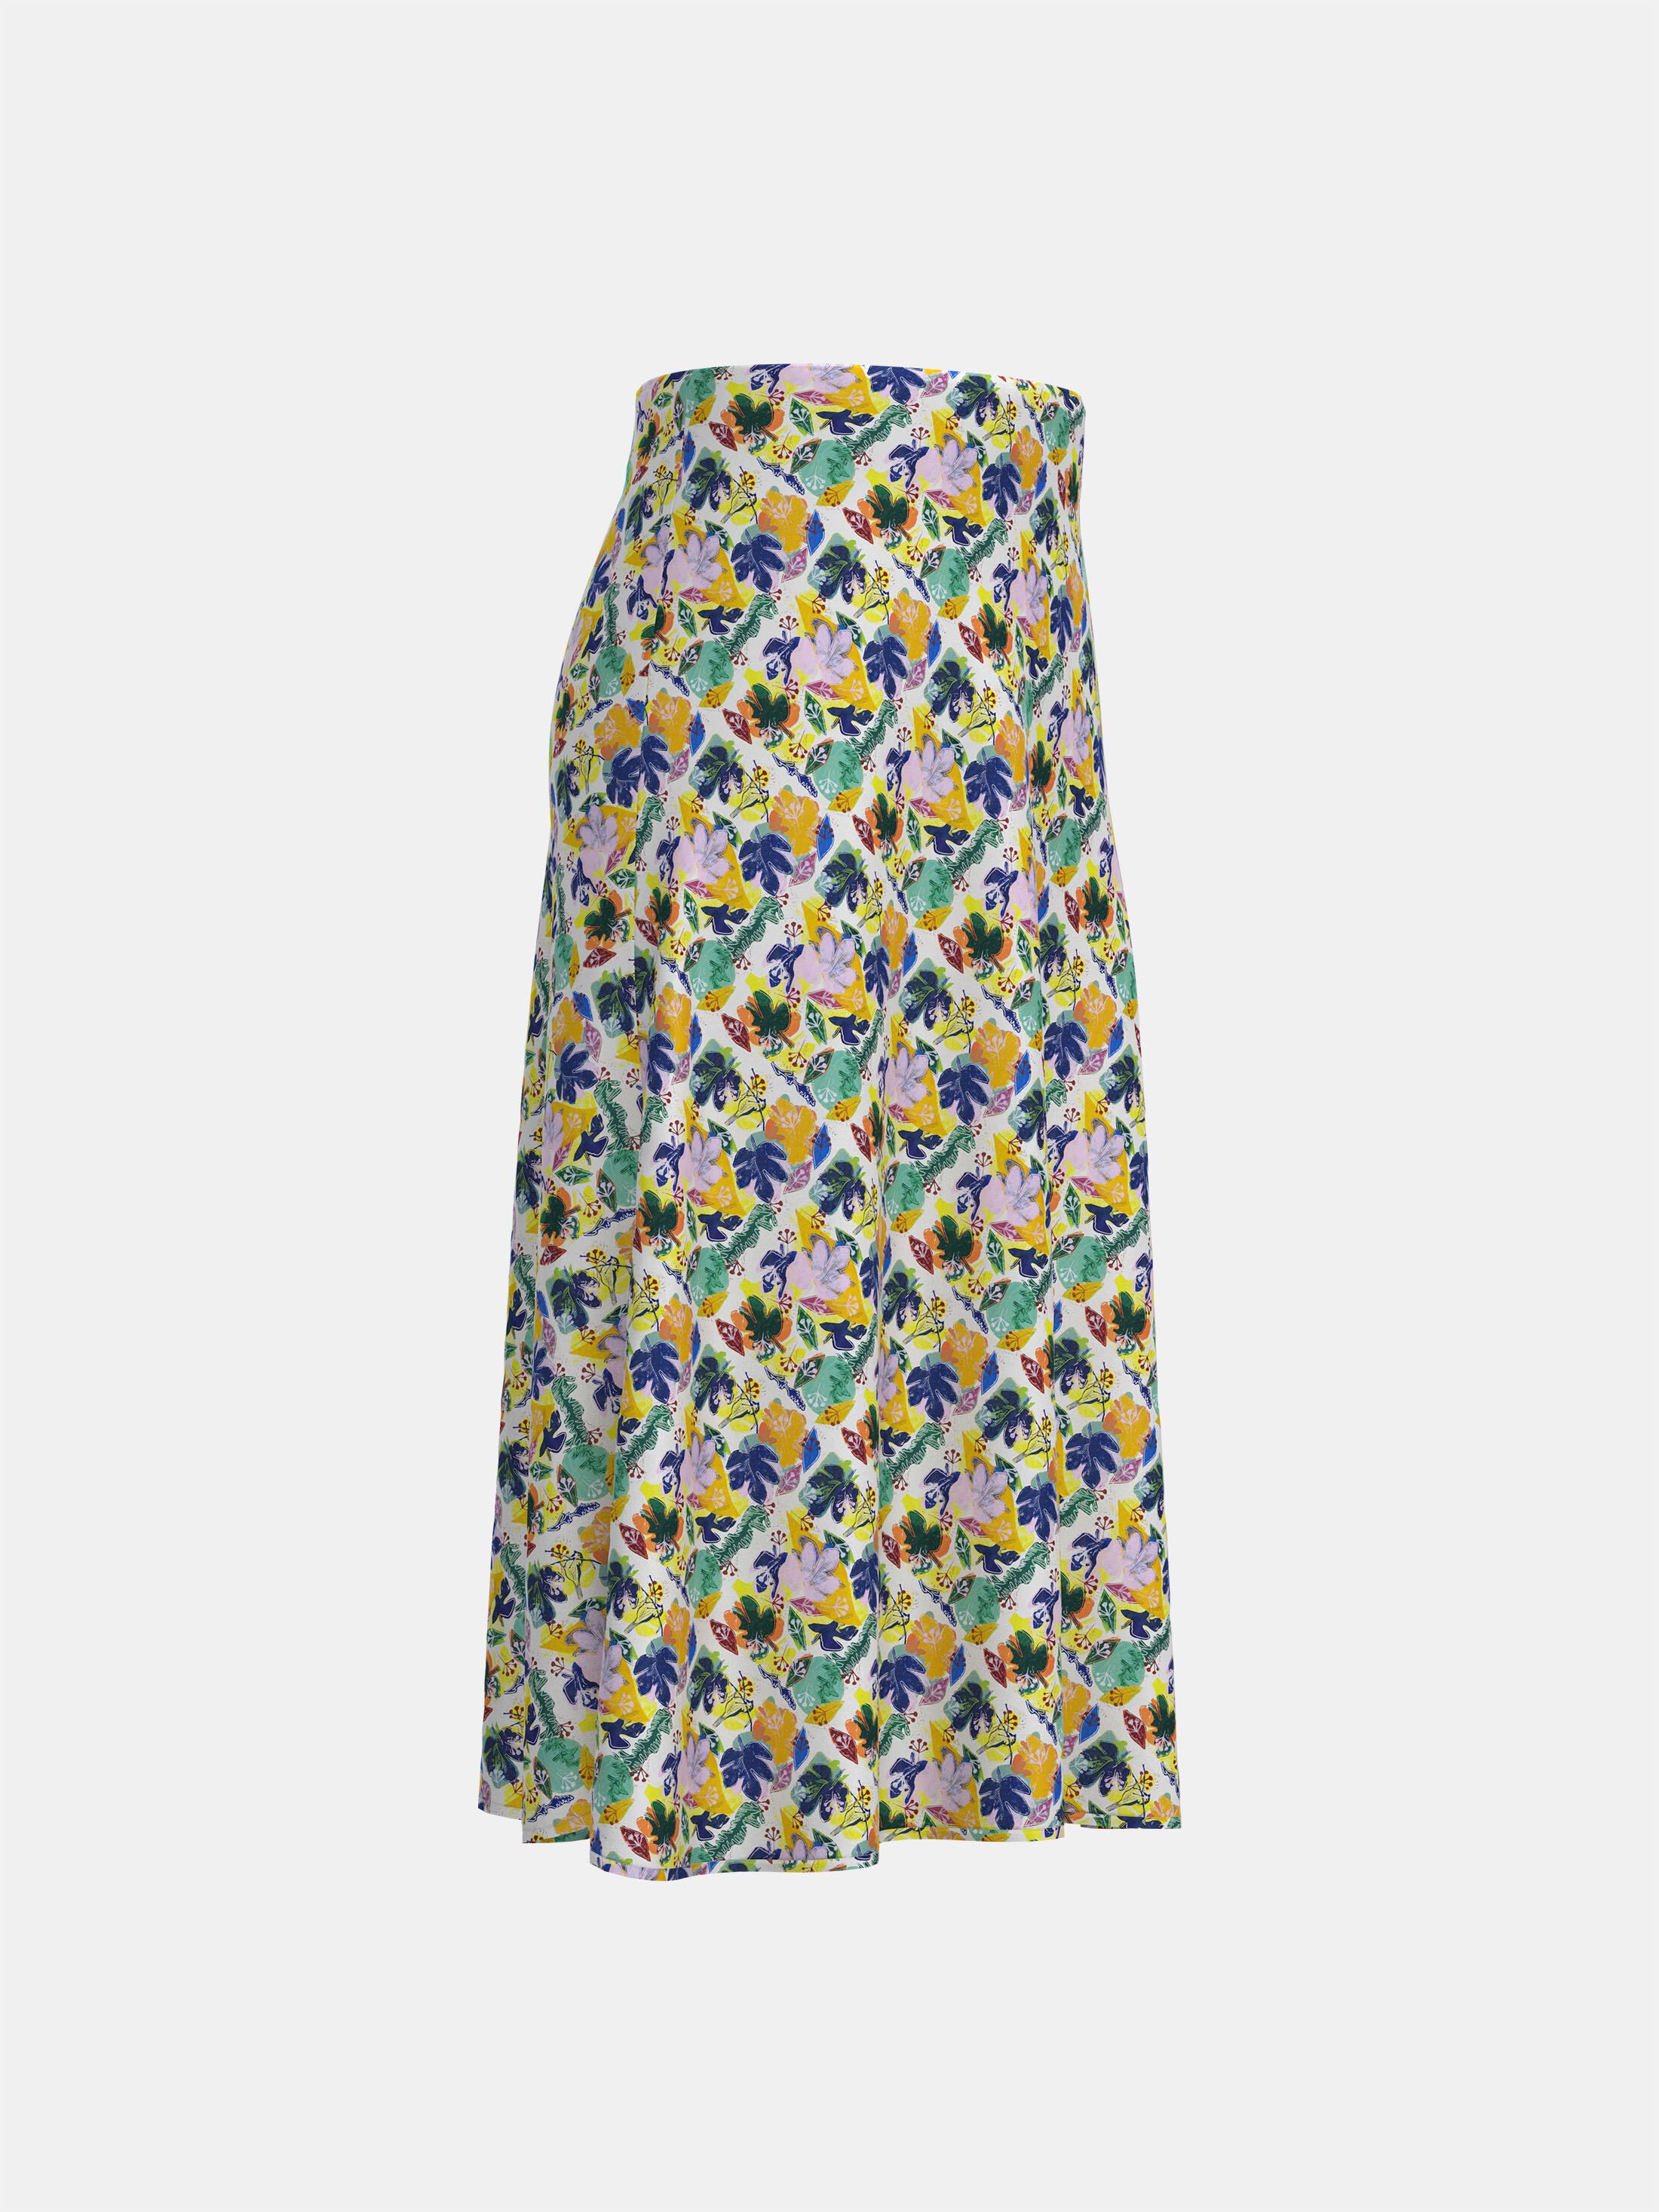 design your own custom a-line skirt